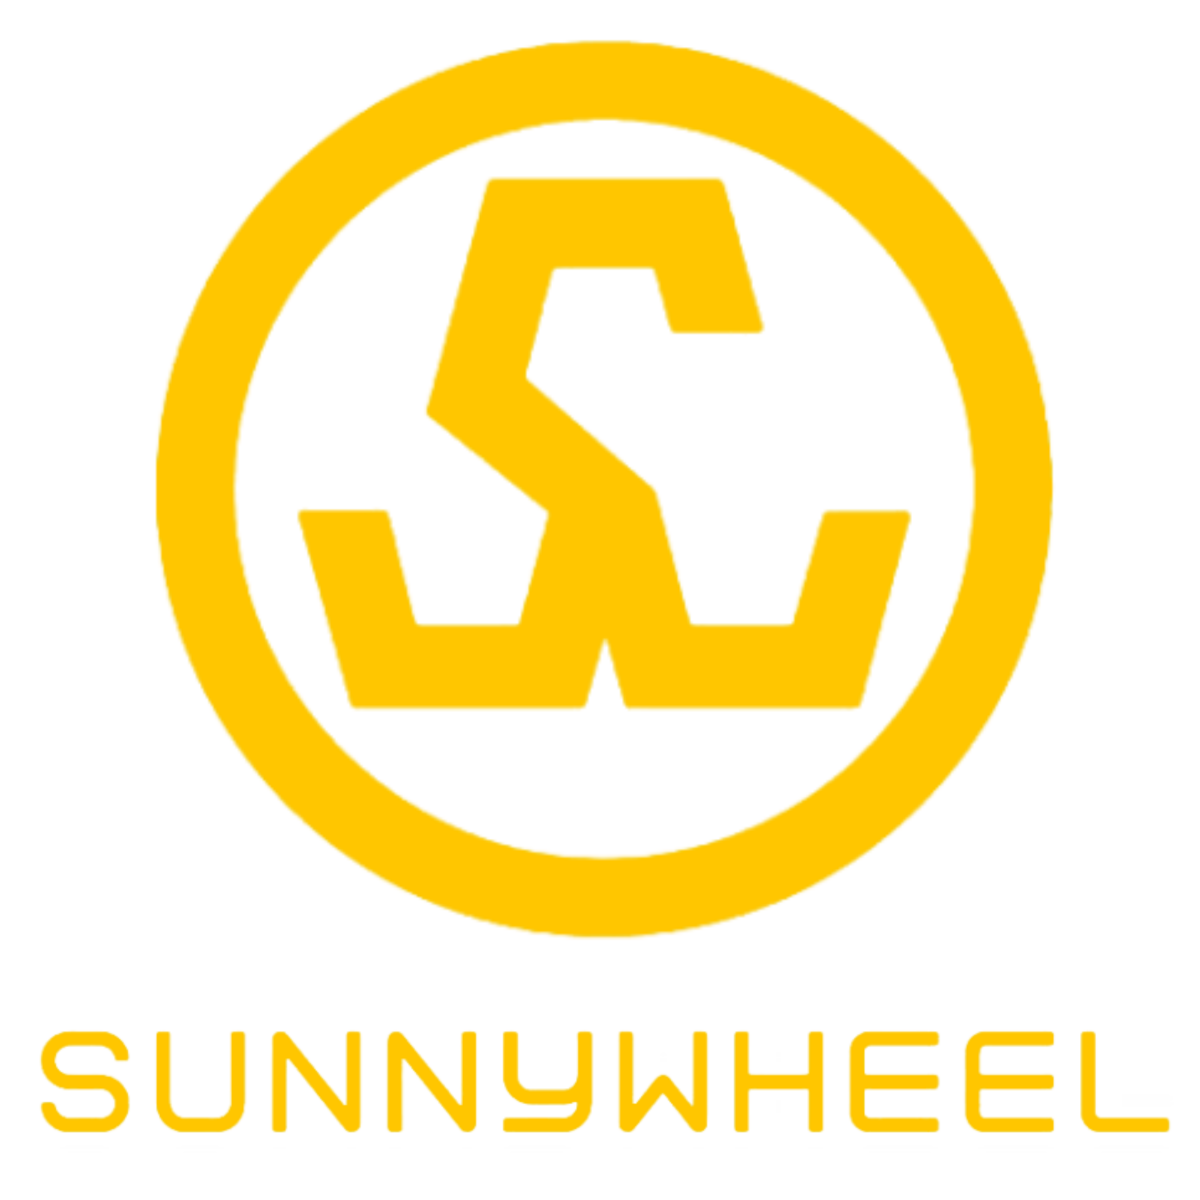 Sunny Wheel Ind. Co., Ltd.   瑞振工業股份有限公司